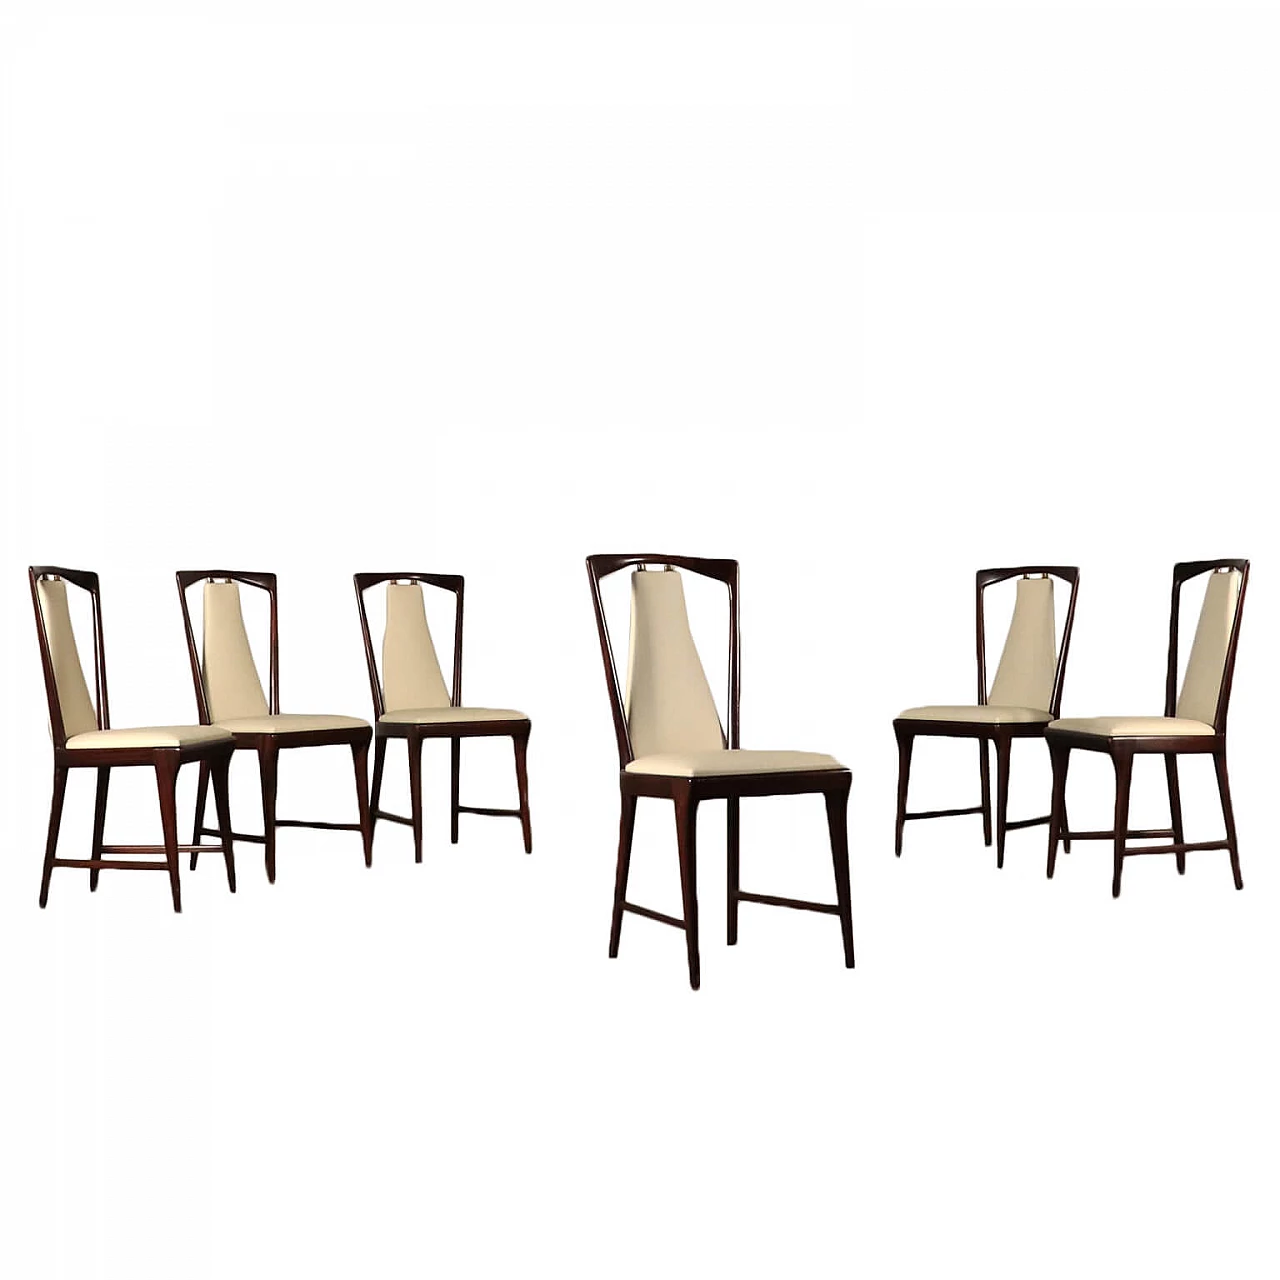 Six chairs by Osvaldo Borsani, 1950s 1068006